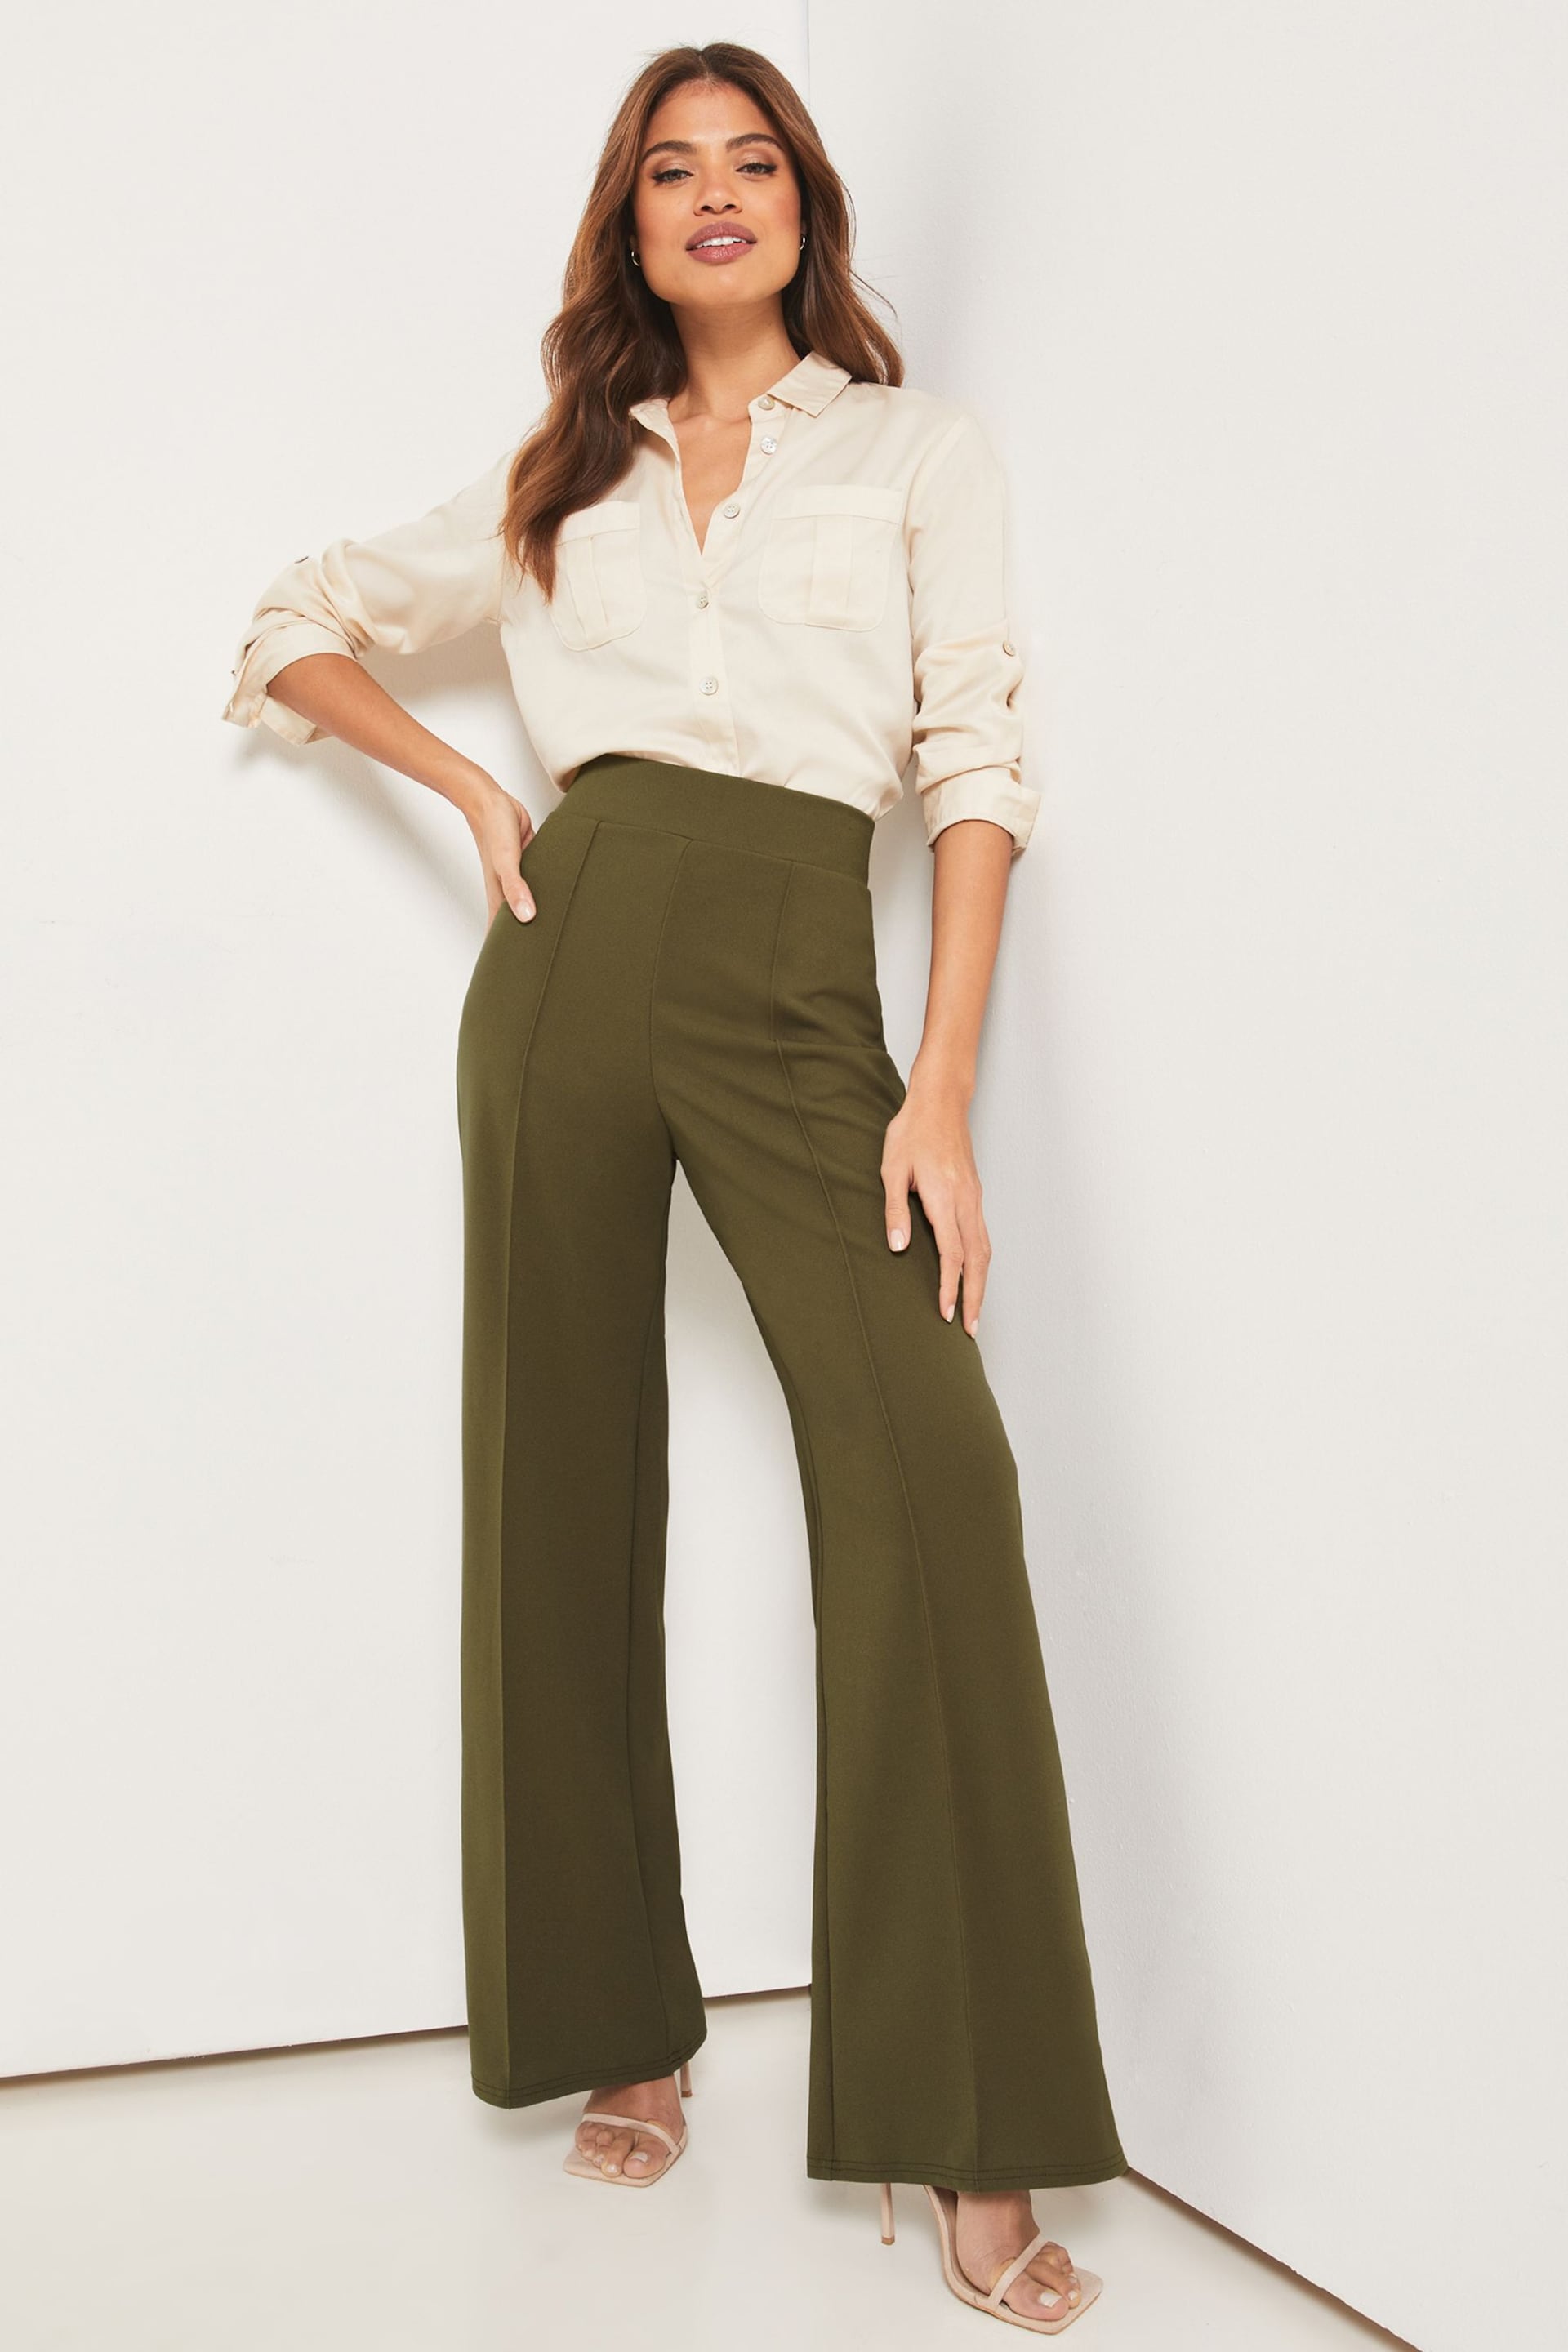 Lipsy Khaki Green Twill Petite High Waist Wide Leg Tailored Trousers - Image 3 of 4